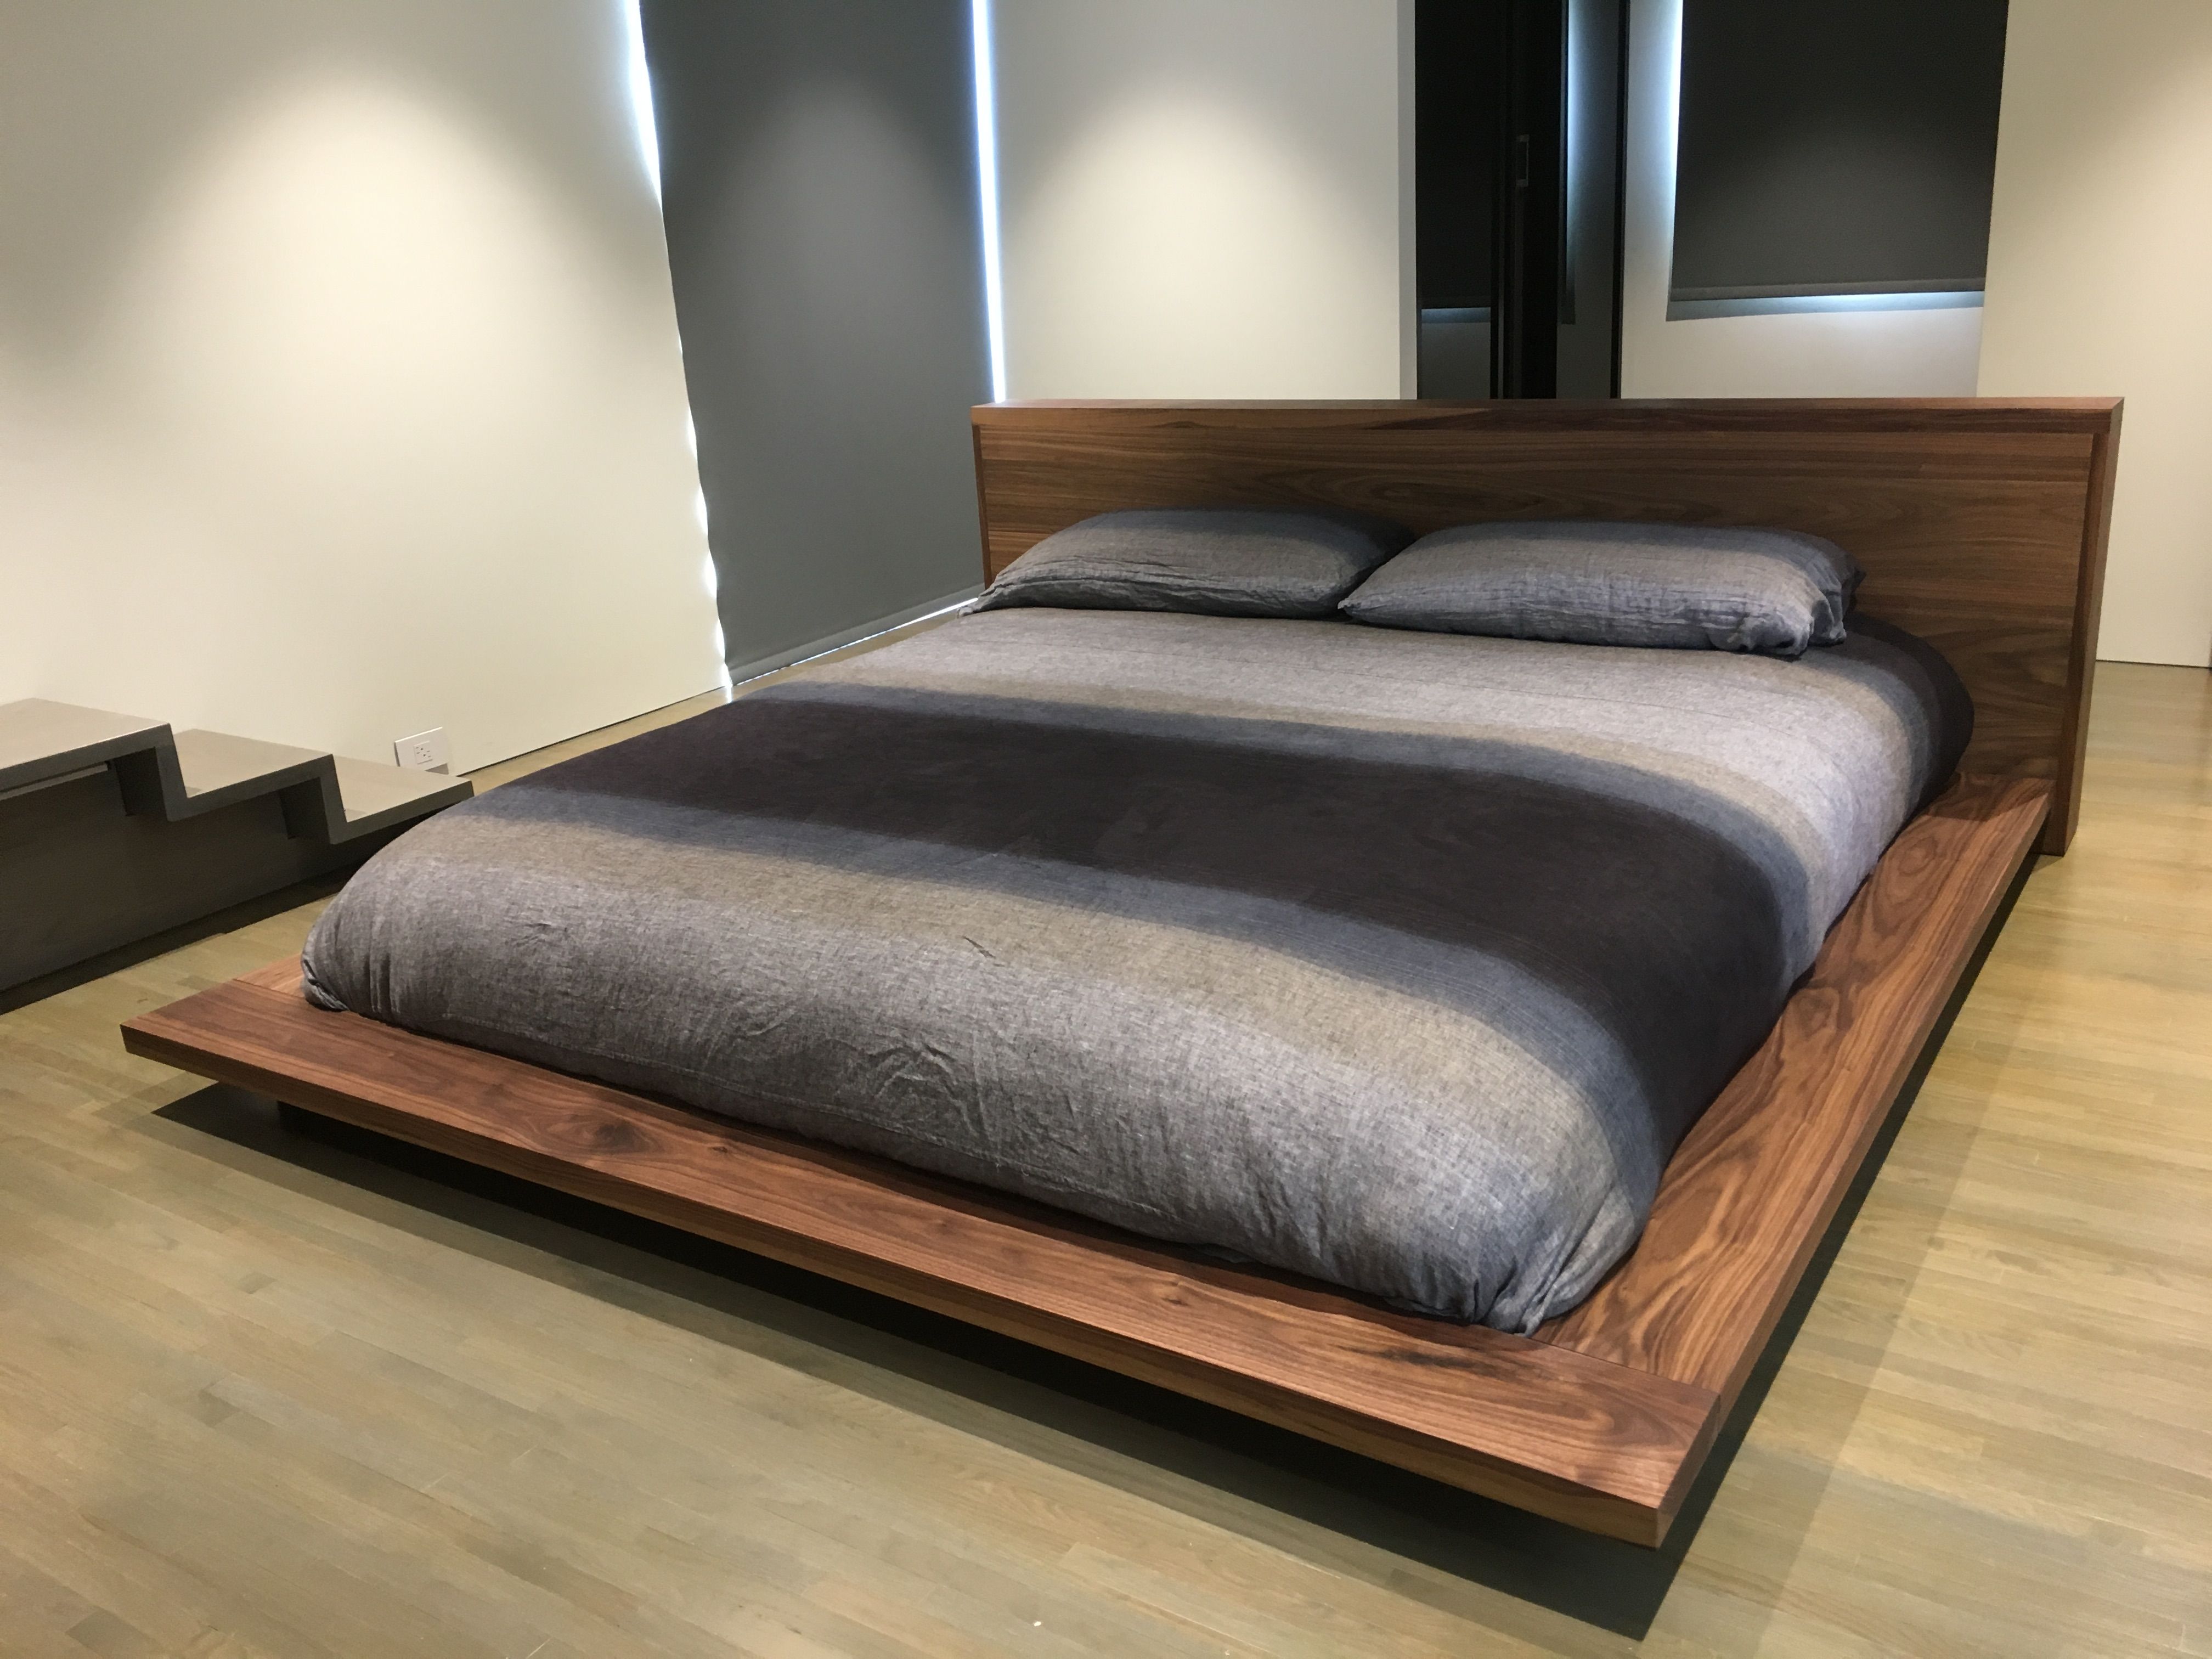 mattresses for a platform bed